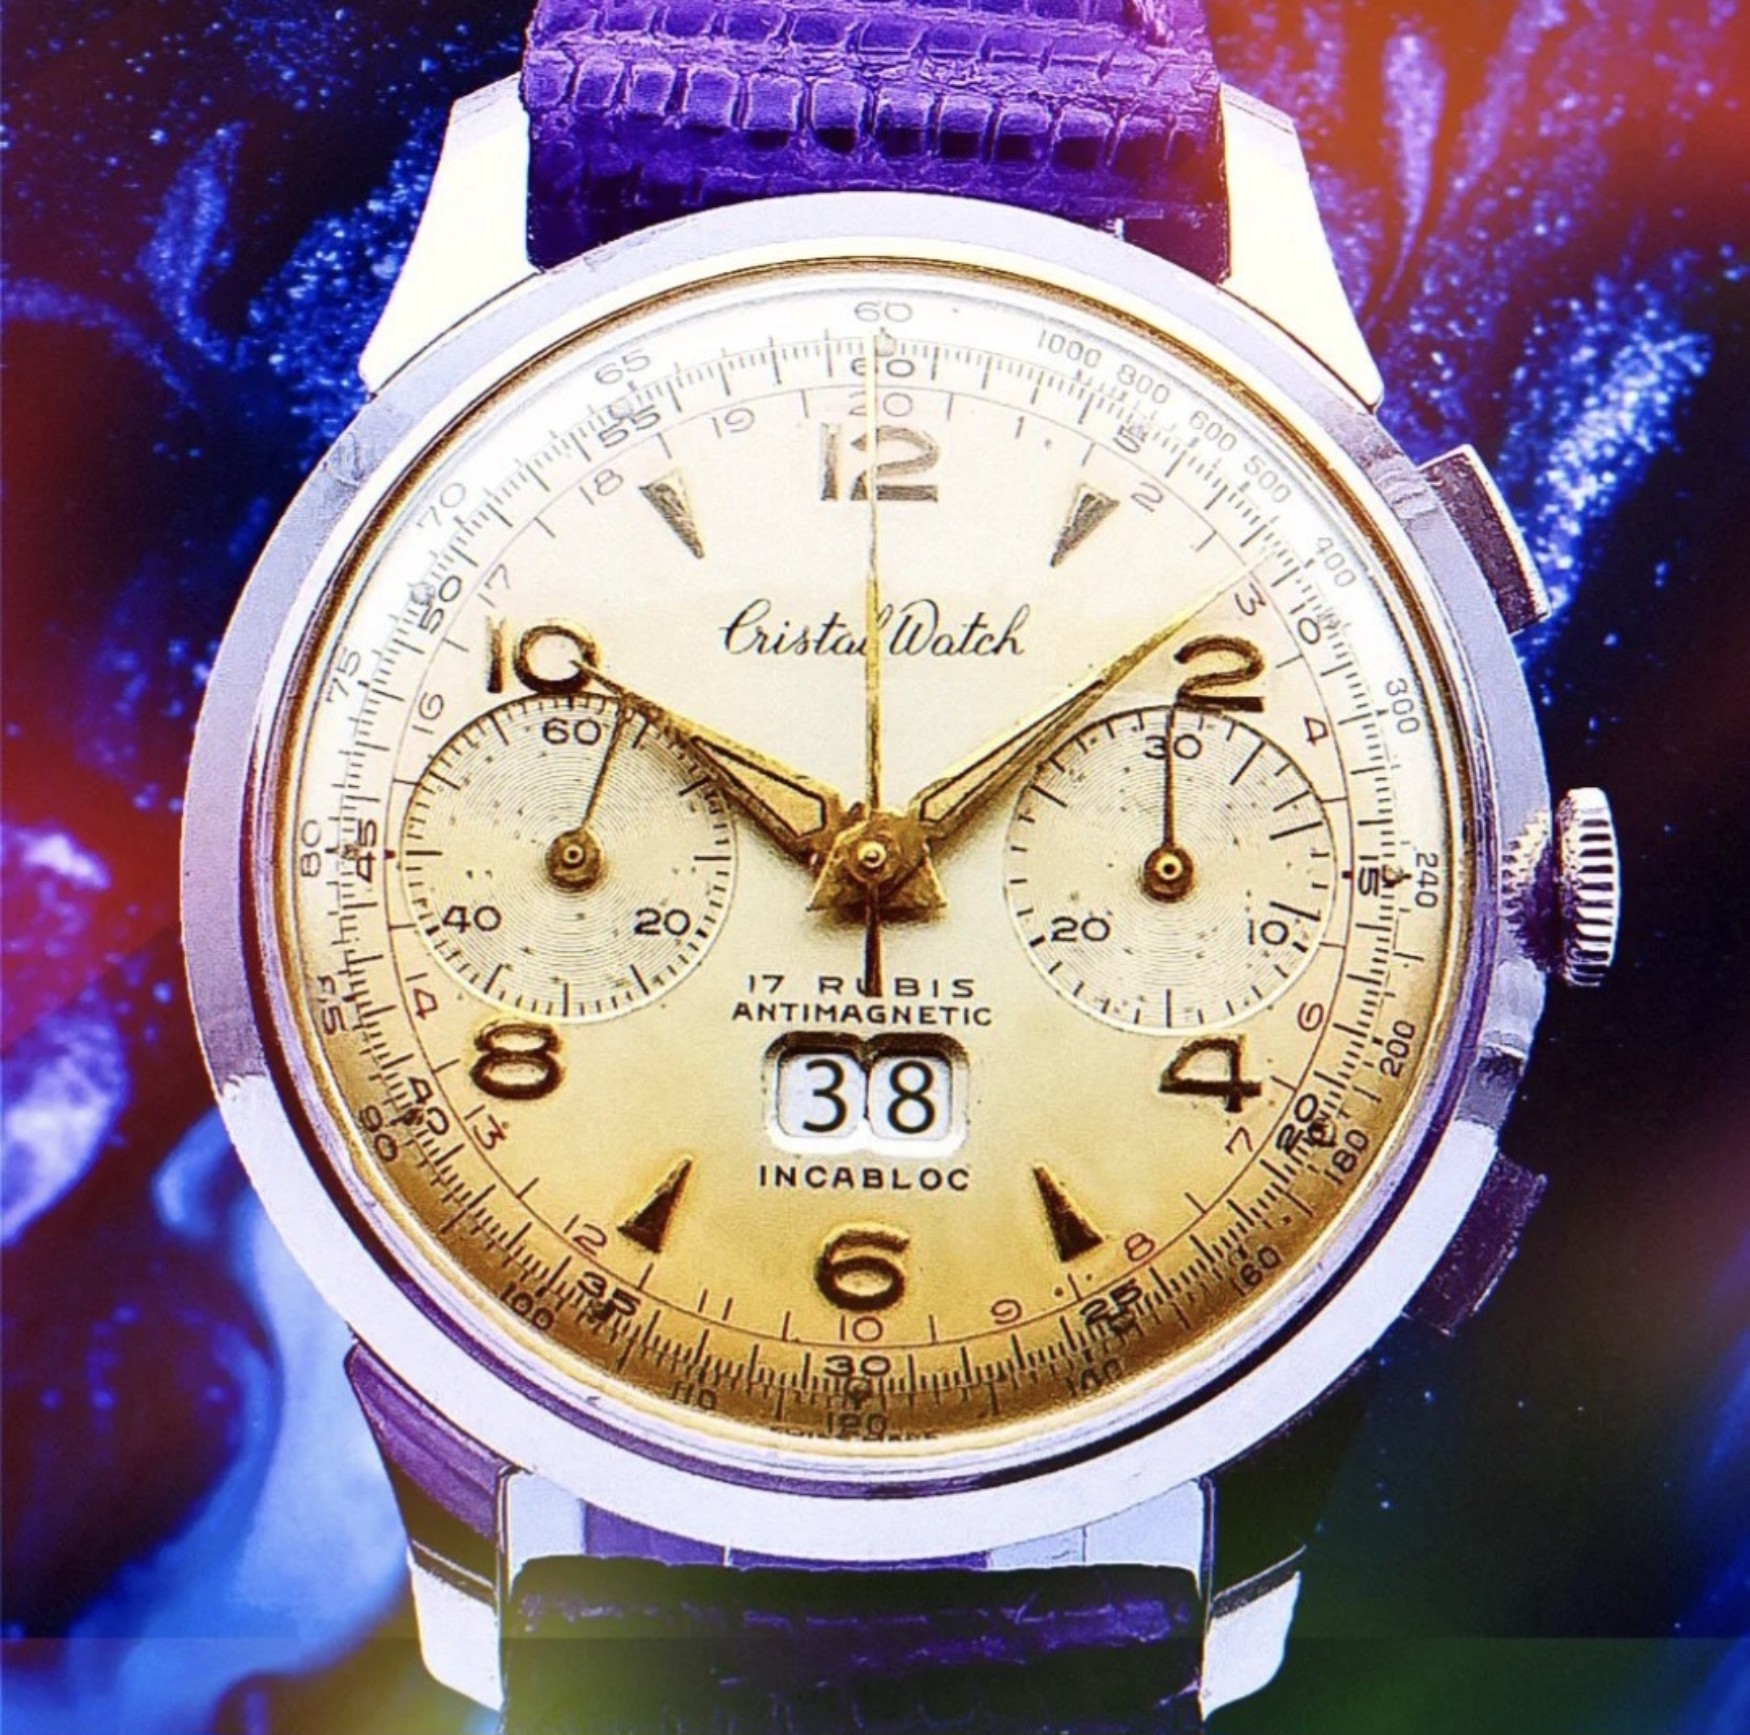 cristal watch chronograph big date